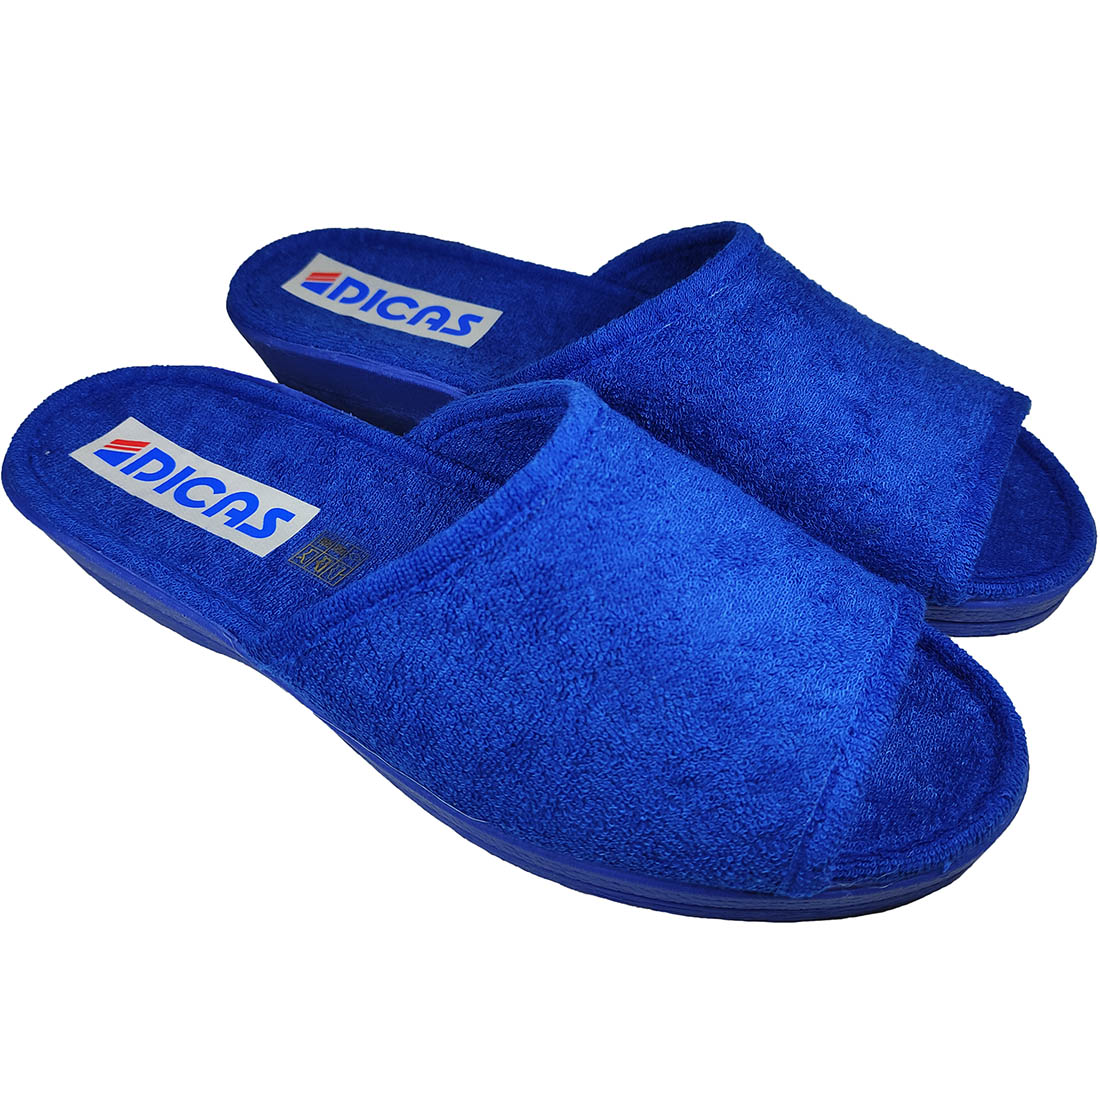 Womens Towel Slippers Dicas 444 Light blue